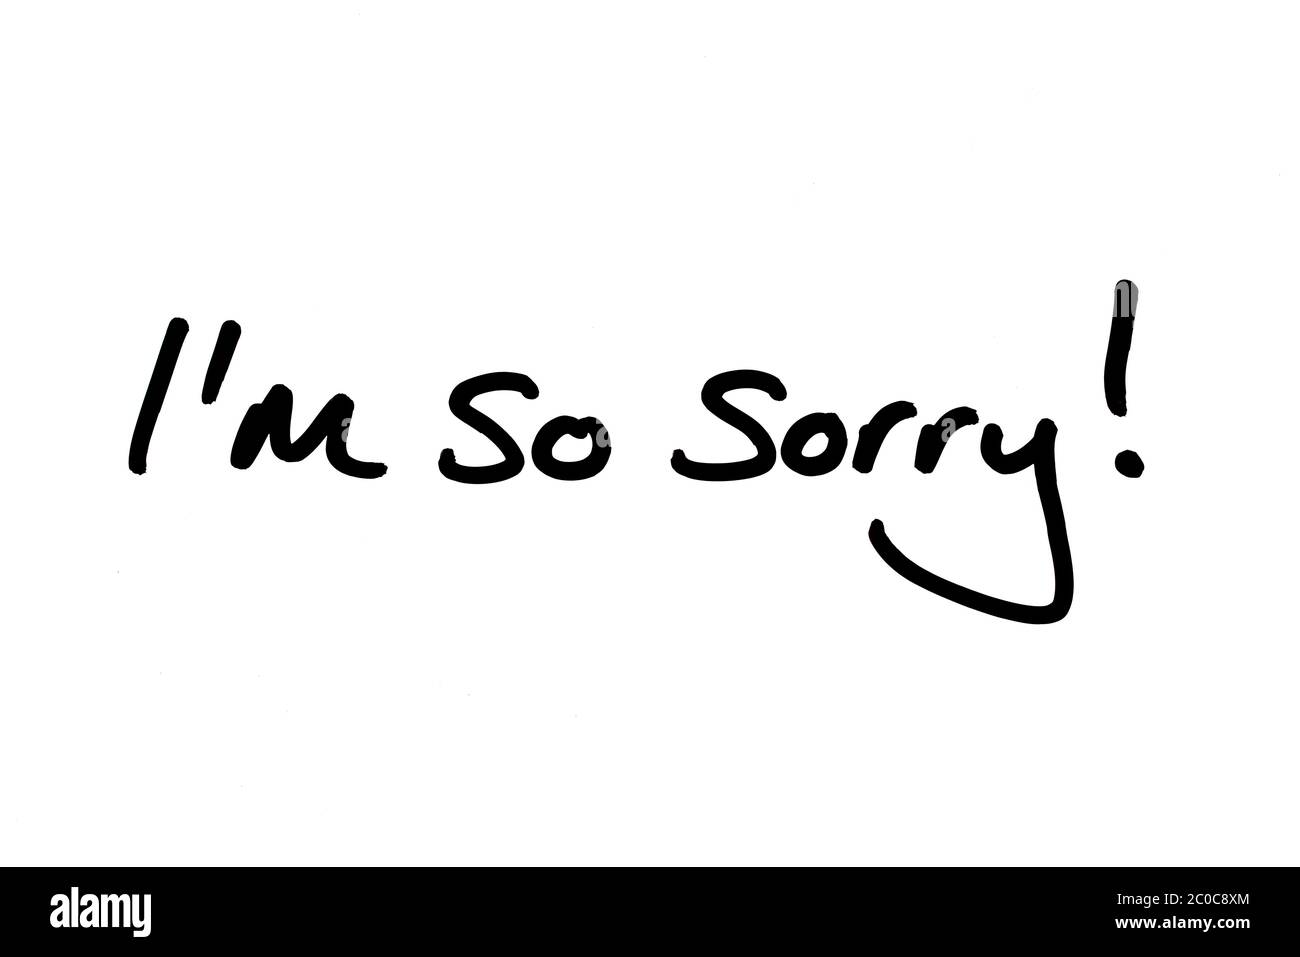 I’m so sorry! handwritten on a white background. Stock Photo